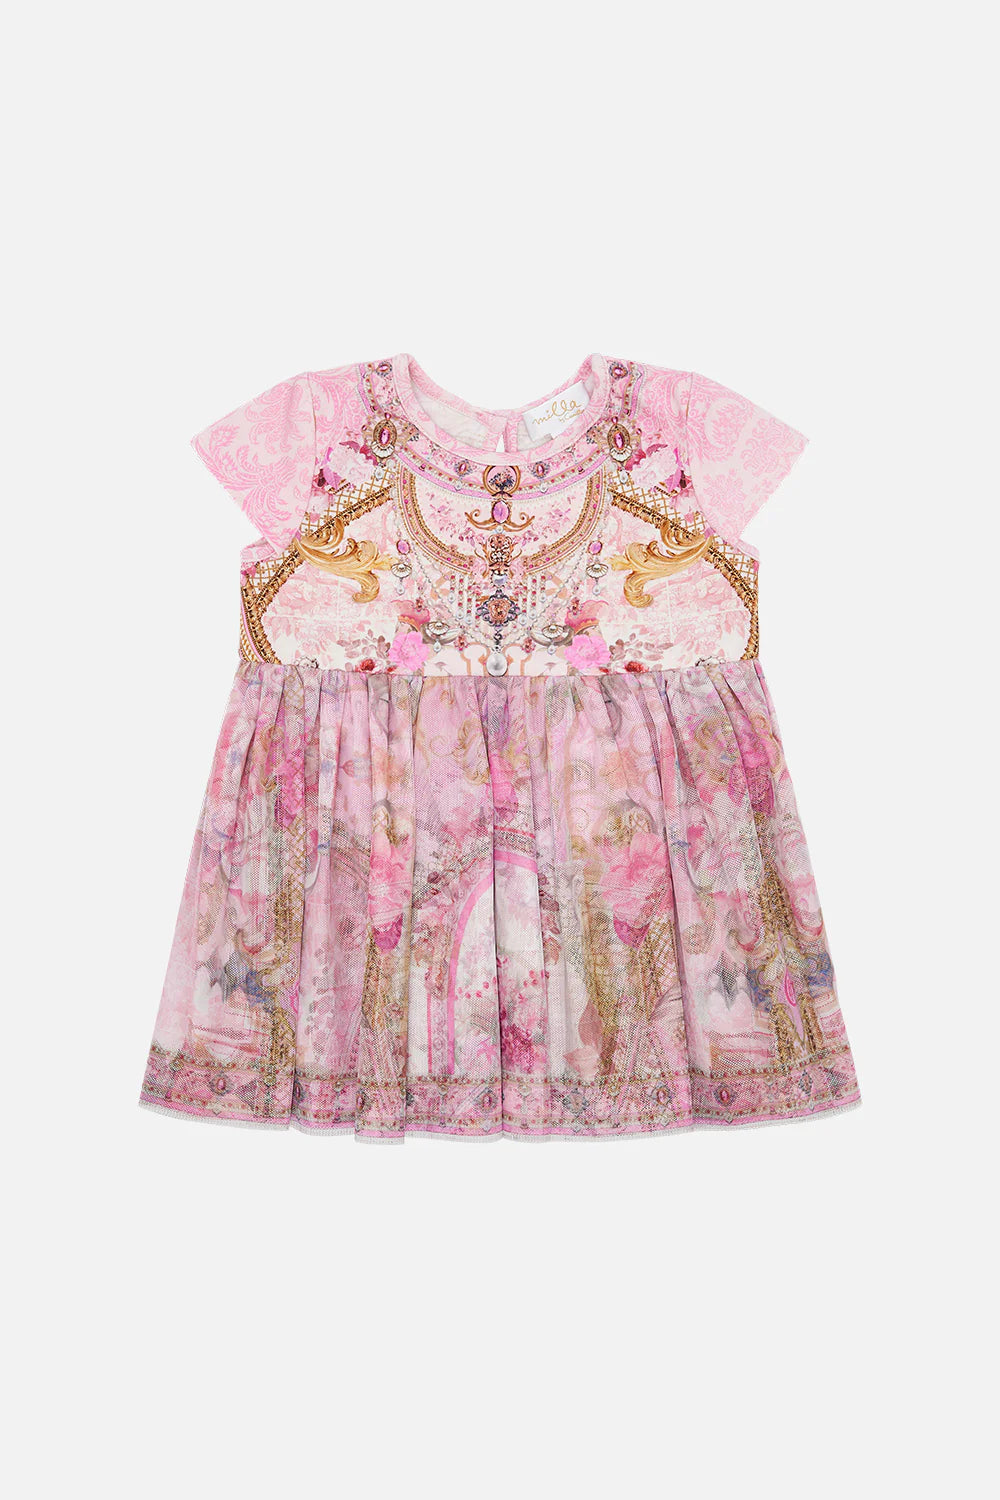 Fresco Fairytale Babies Jersey Tulle Dress BABY CLOTHING CAMILLA 